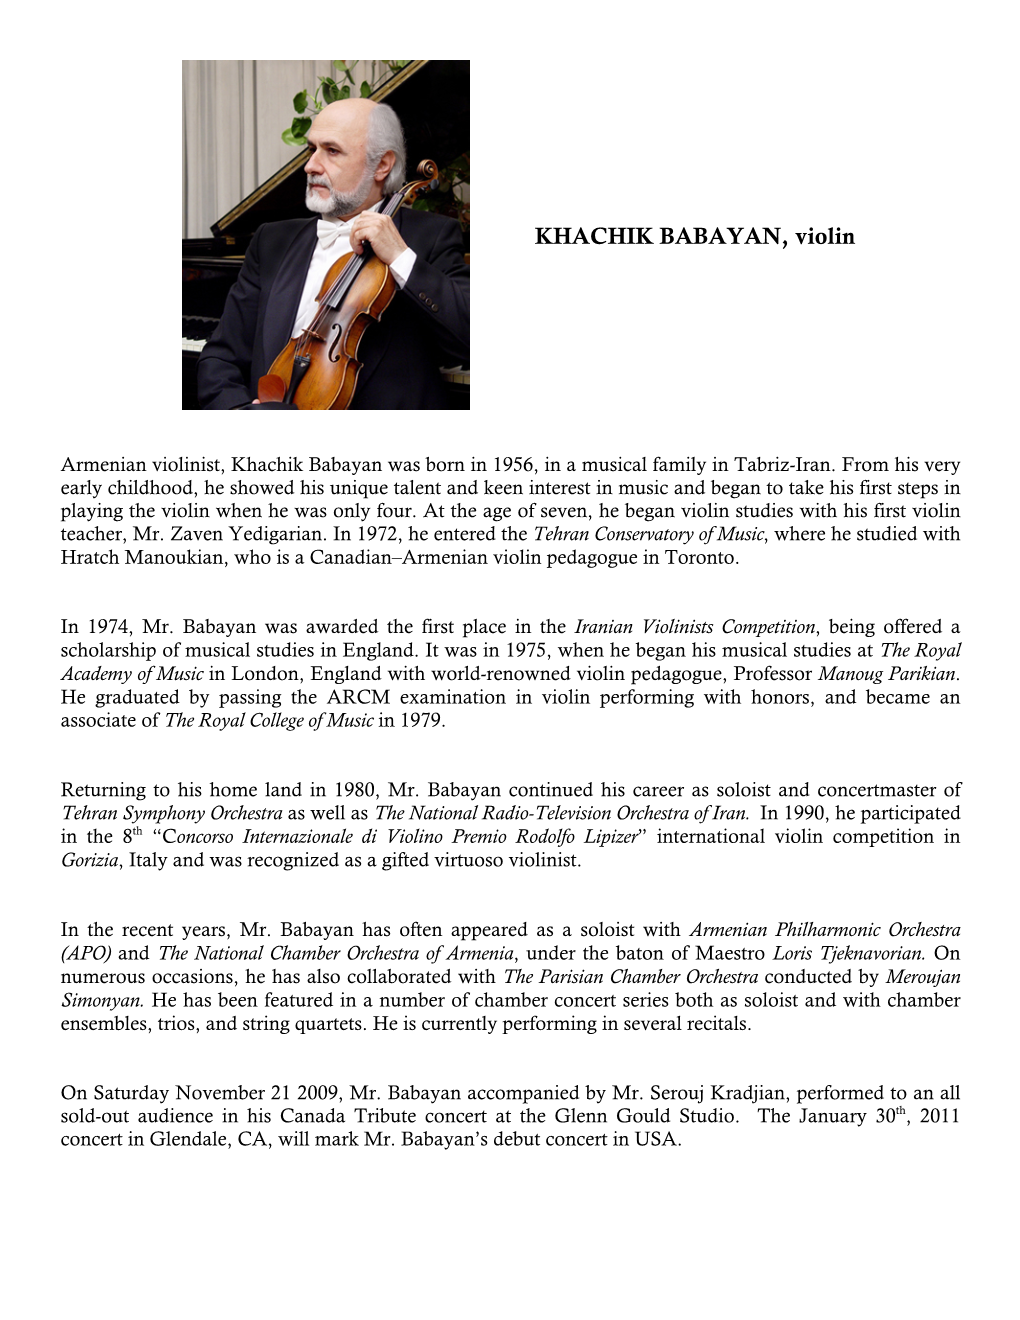 KHACHIK BABAYAN, Violin